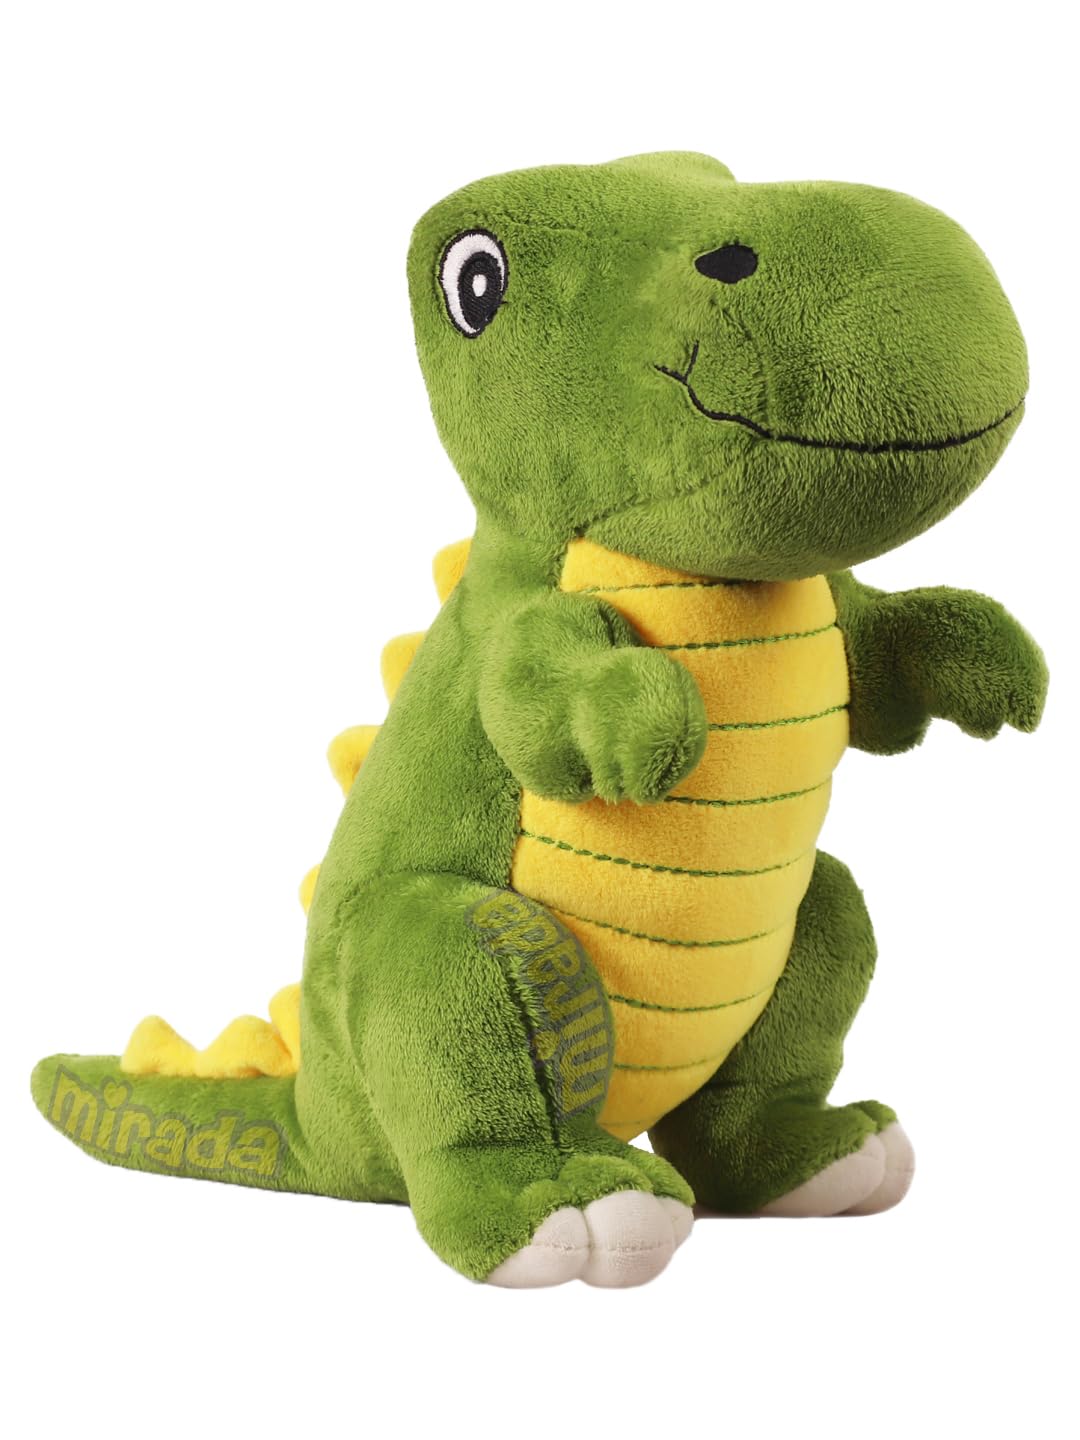 Mirada Super Soft Standing Green and Yellow Dinosaur Soft Toy for  Boys/Kids/Girls | Soft Stuffed Plush Animal | - 35cm